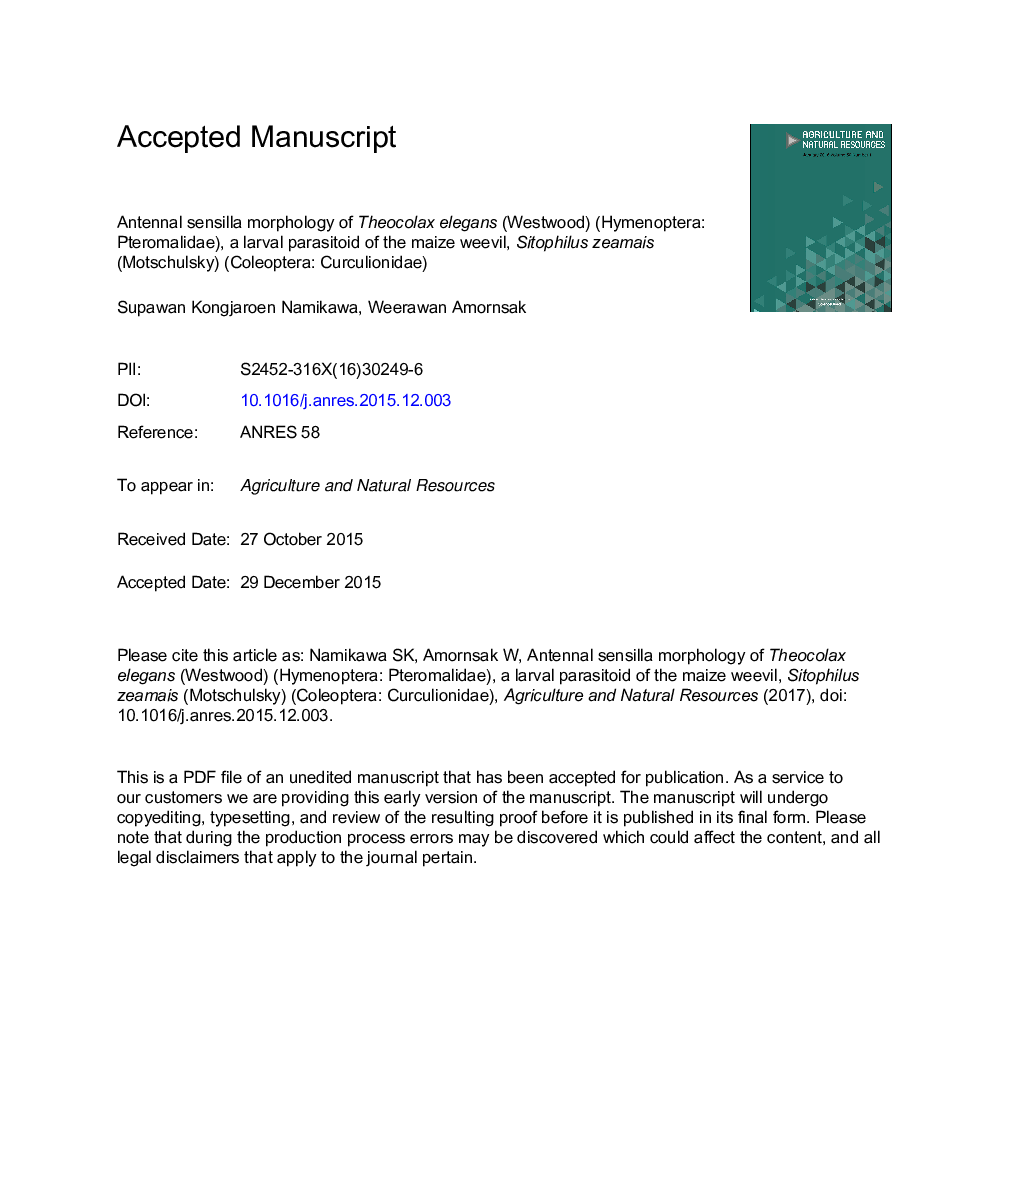 Antennal sensilla morphology of Theocolax elegans (Westwood) (Hymenoptera: Pteromalidae), a larval parasitoid of the maize weevil, Sitophilus zeamais (Motschulsky) (Coleoptera: Curculionidae)